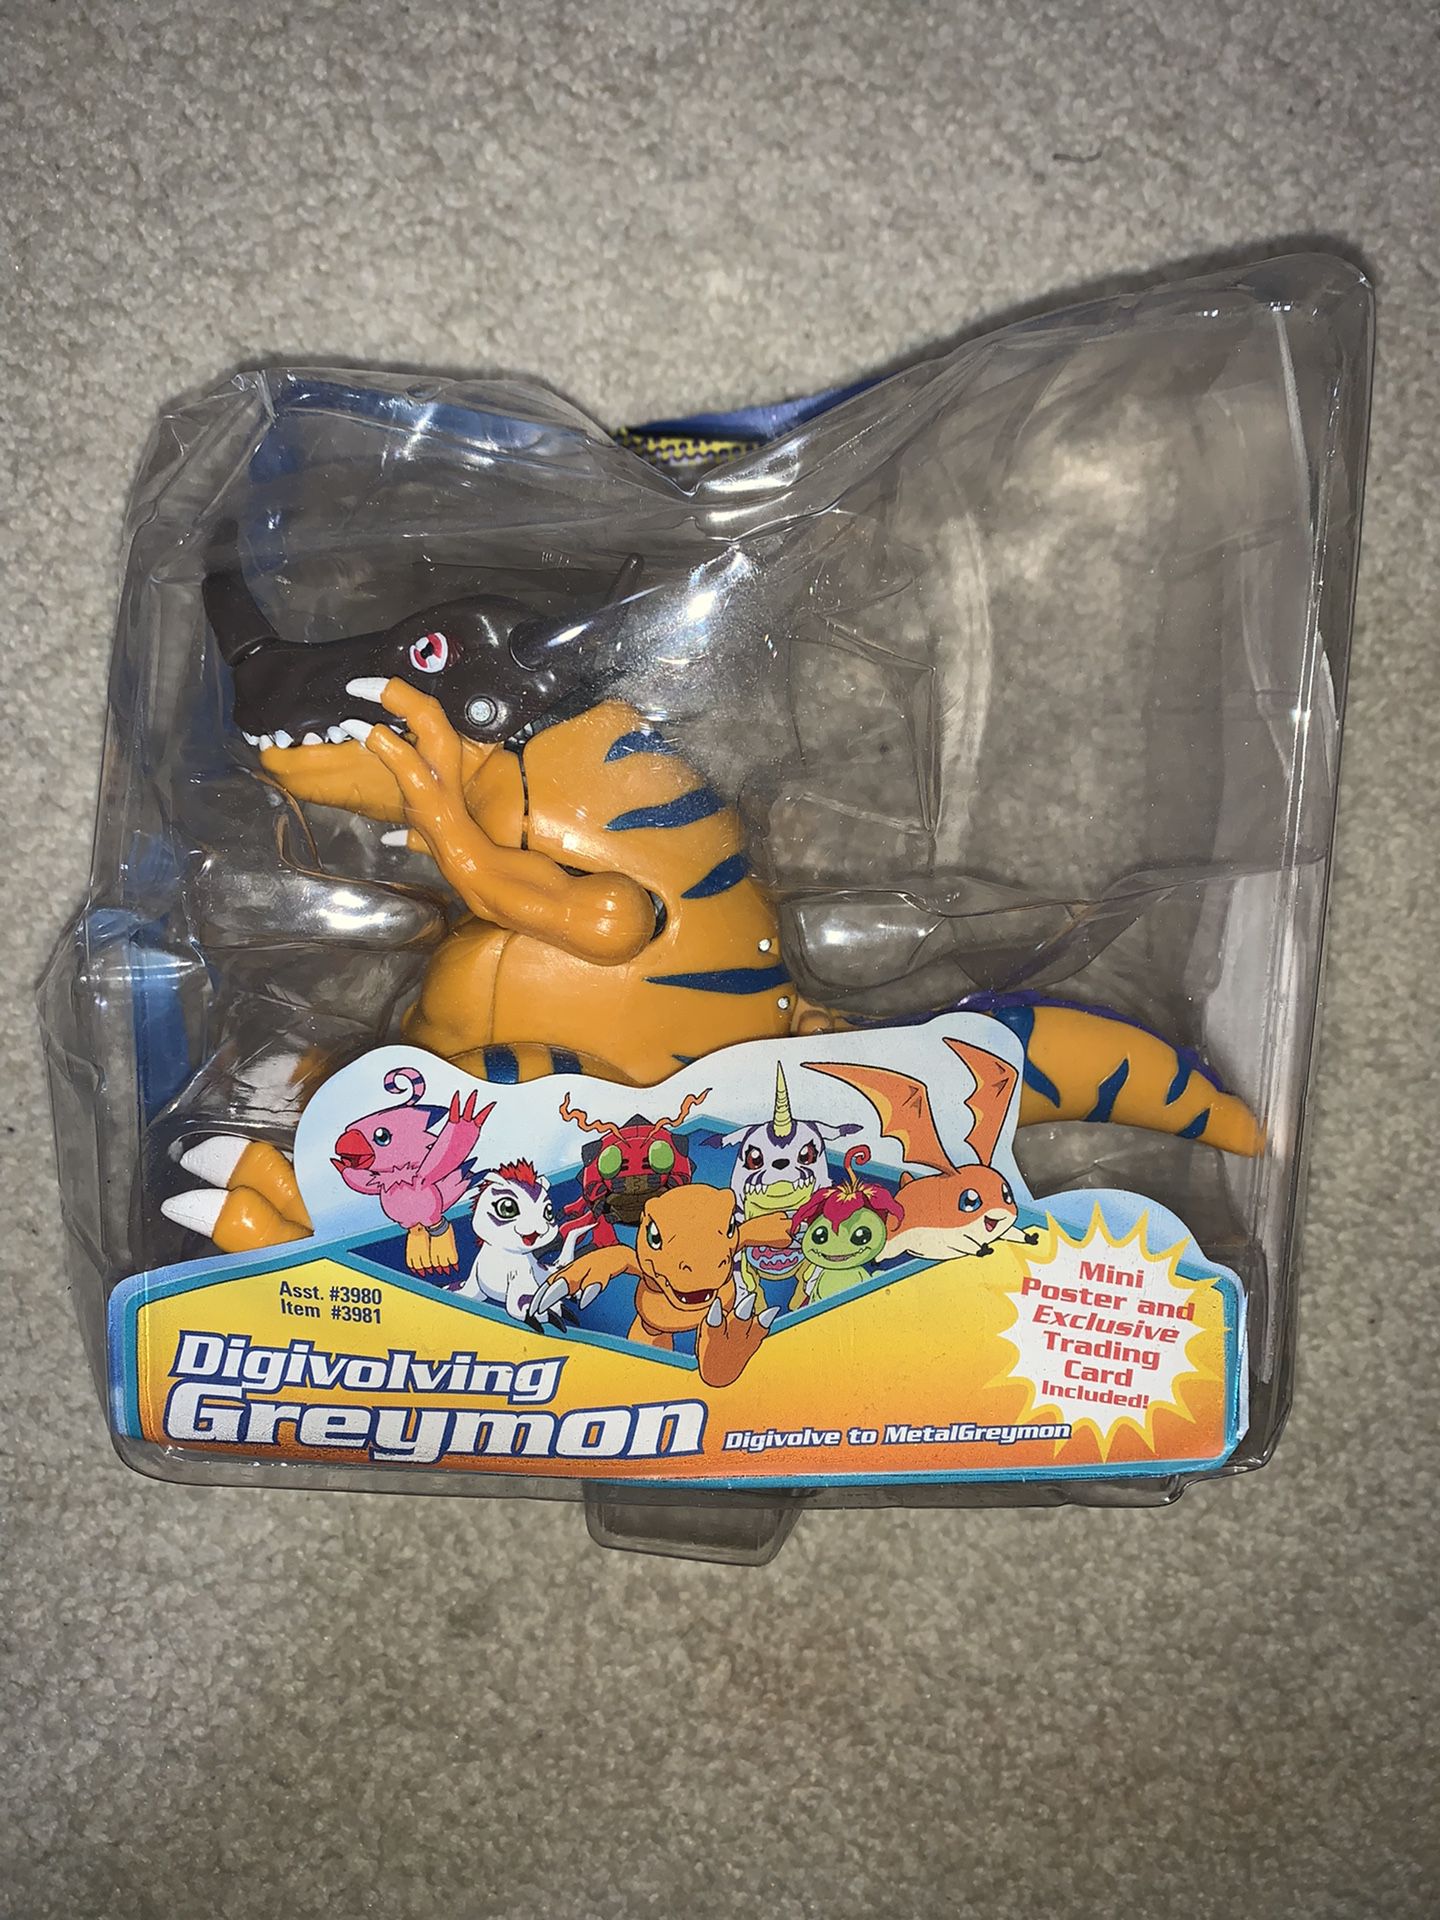 Bandai 6" Digimon Digivolving Greymon To MetalGreymon Action Figure